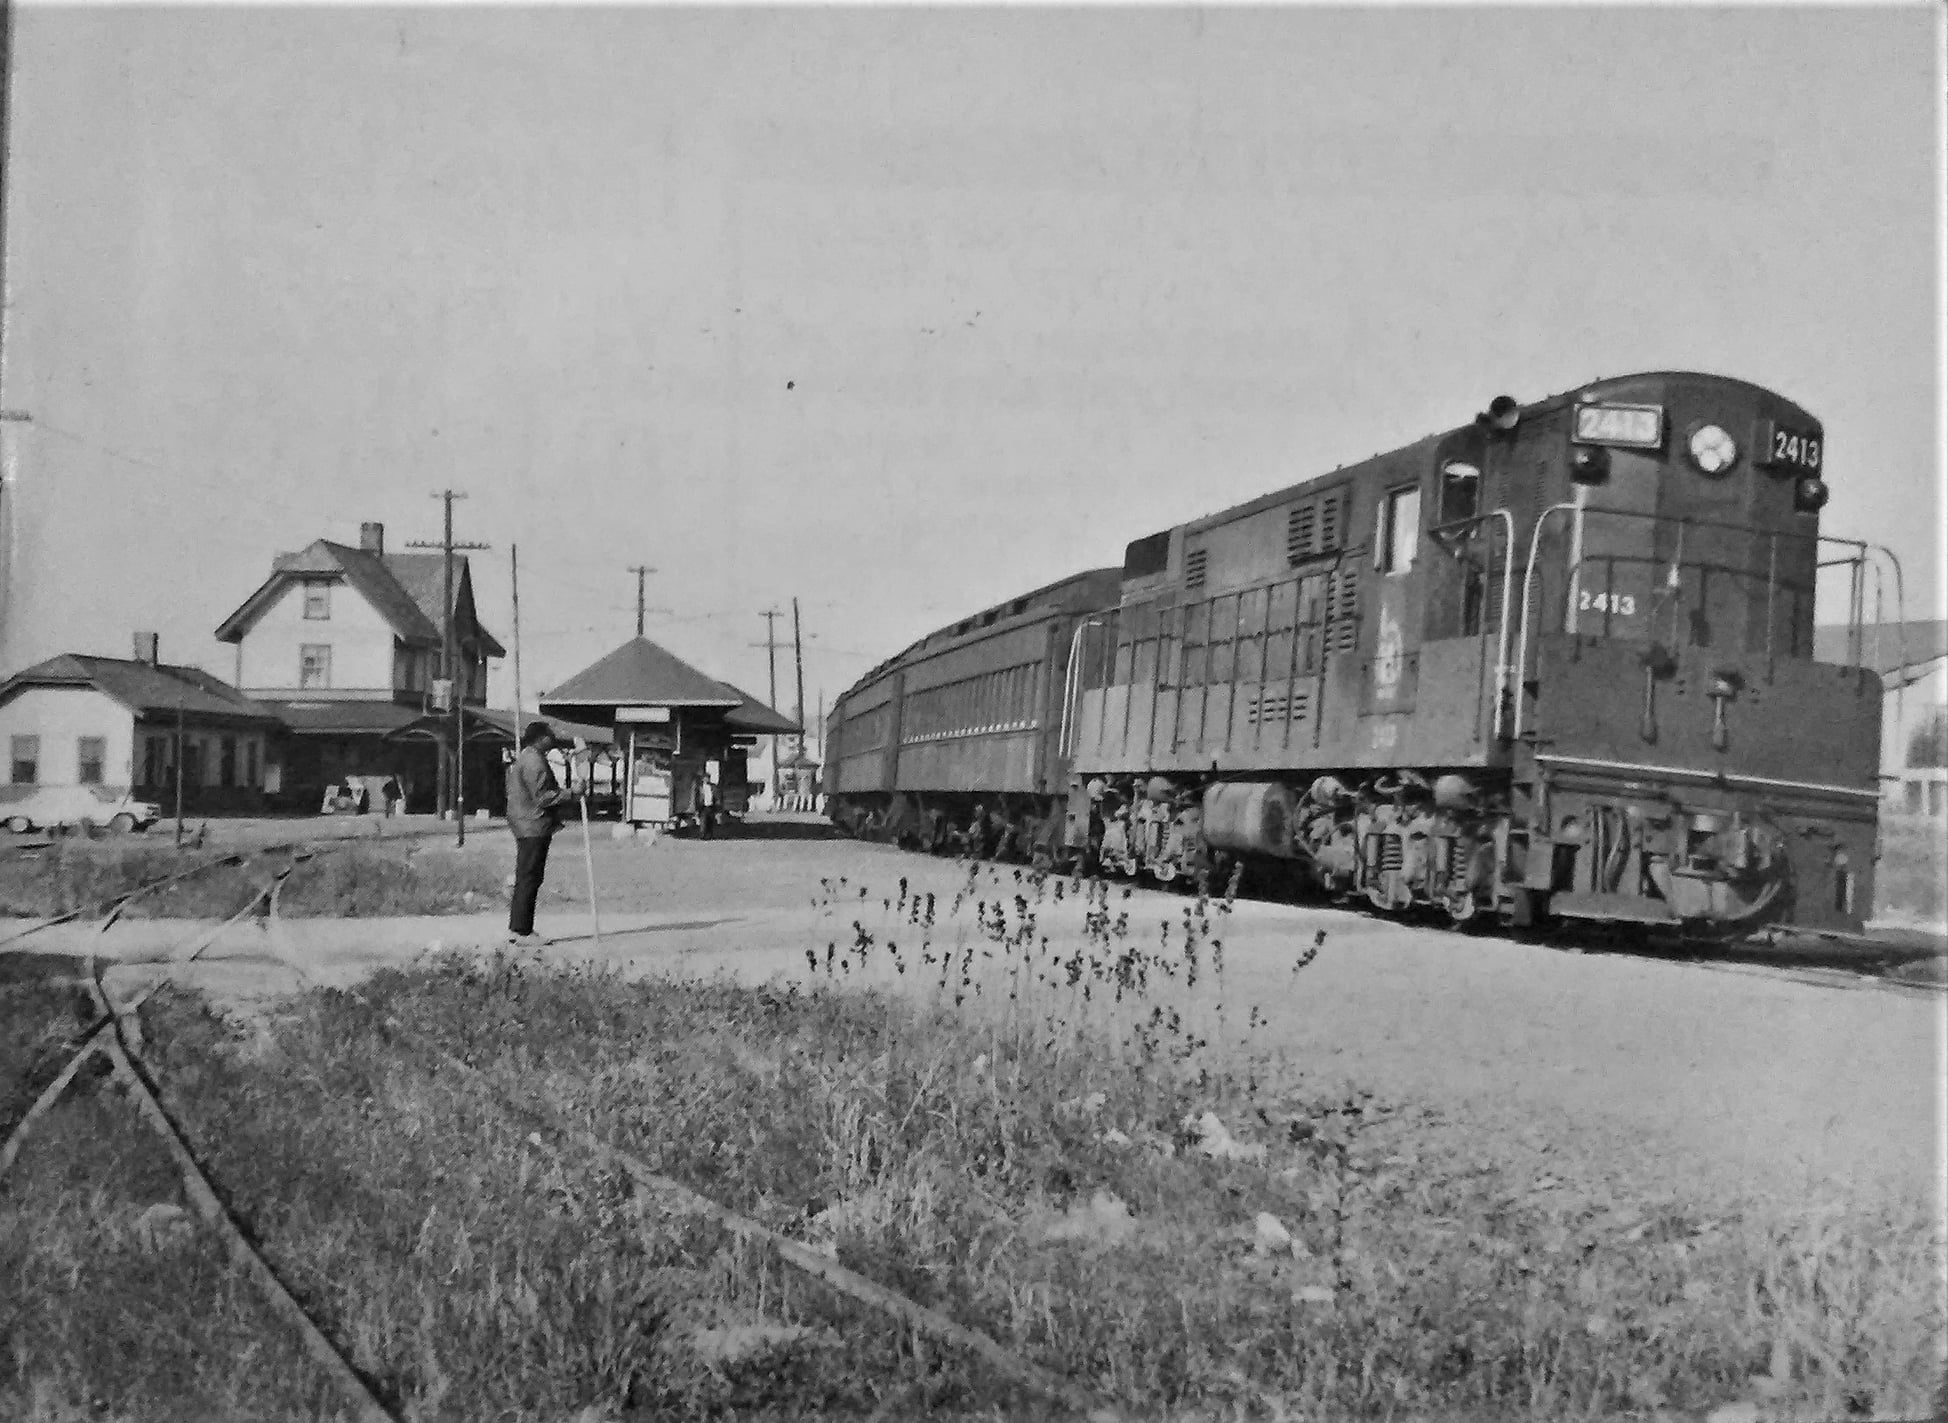 CNJ #2413 with train at Matawan, NJ 1968.jpg